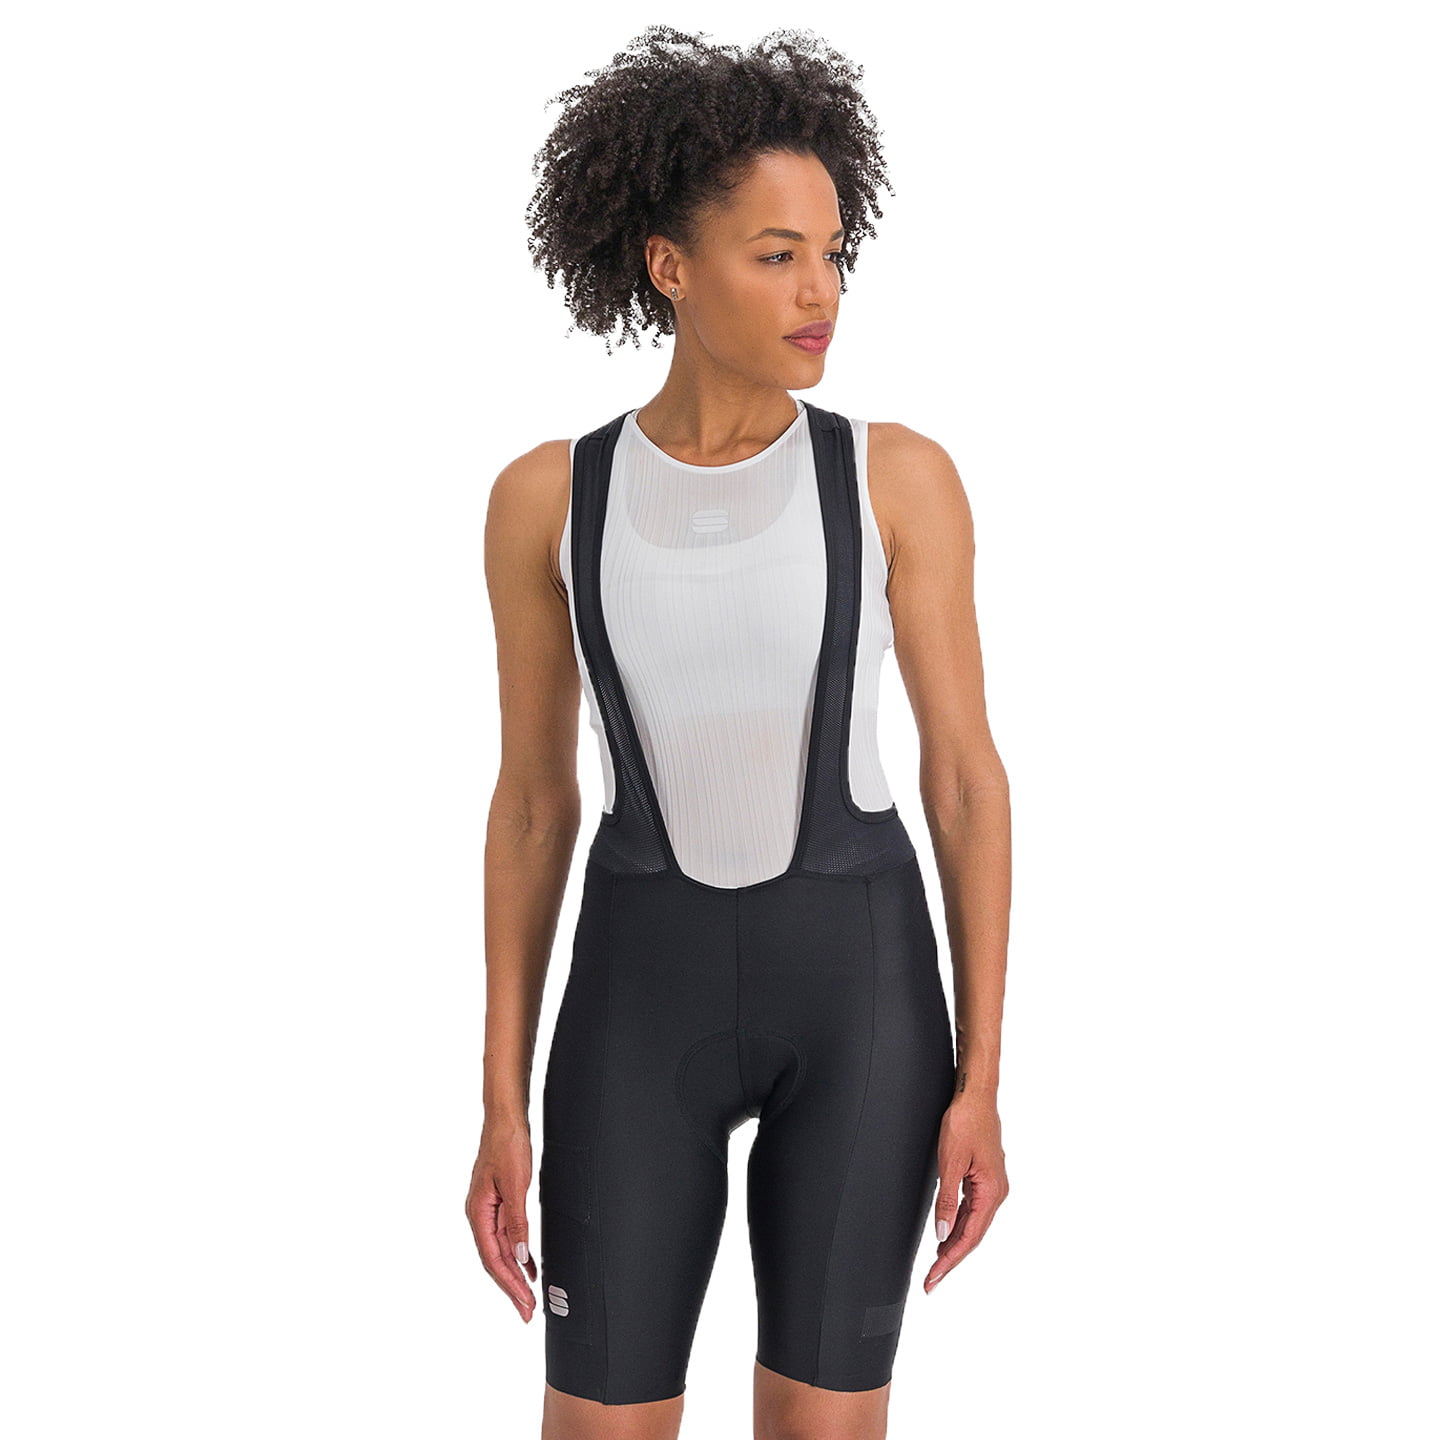 Women’s Bib Shorts, size M, Cycle shorts, Cycling clothing